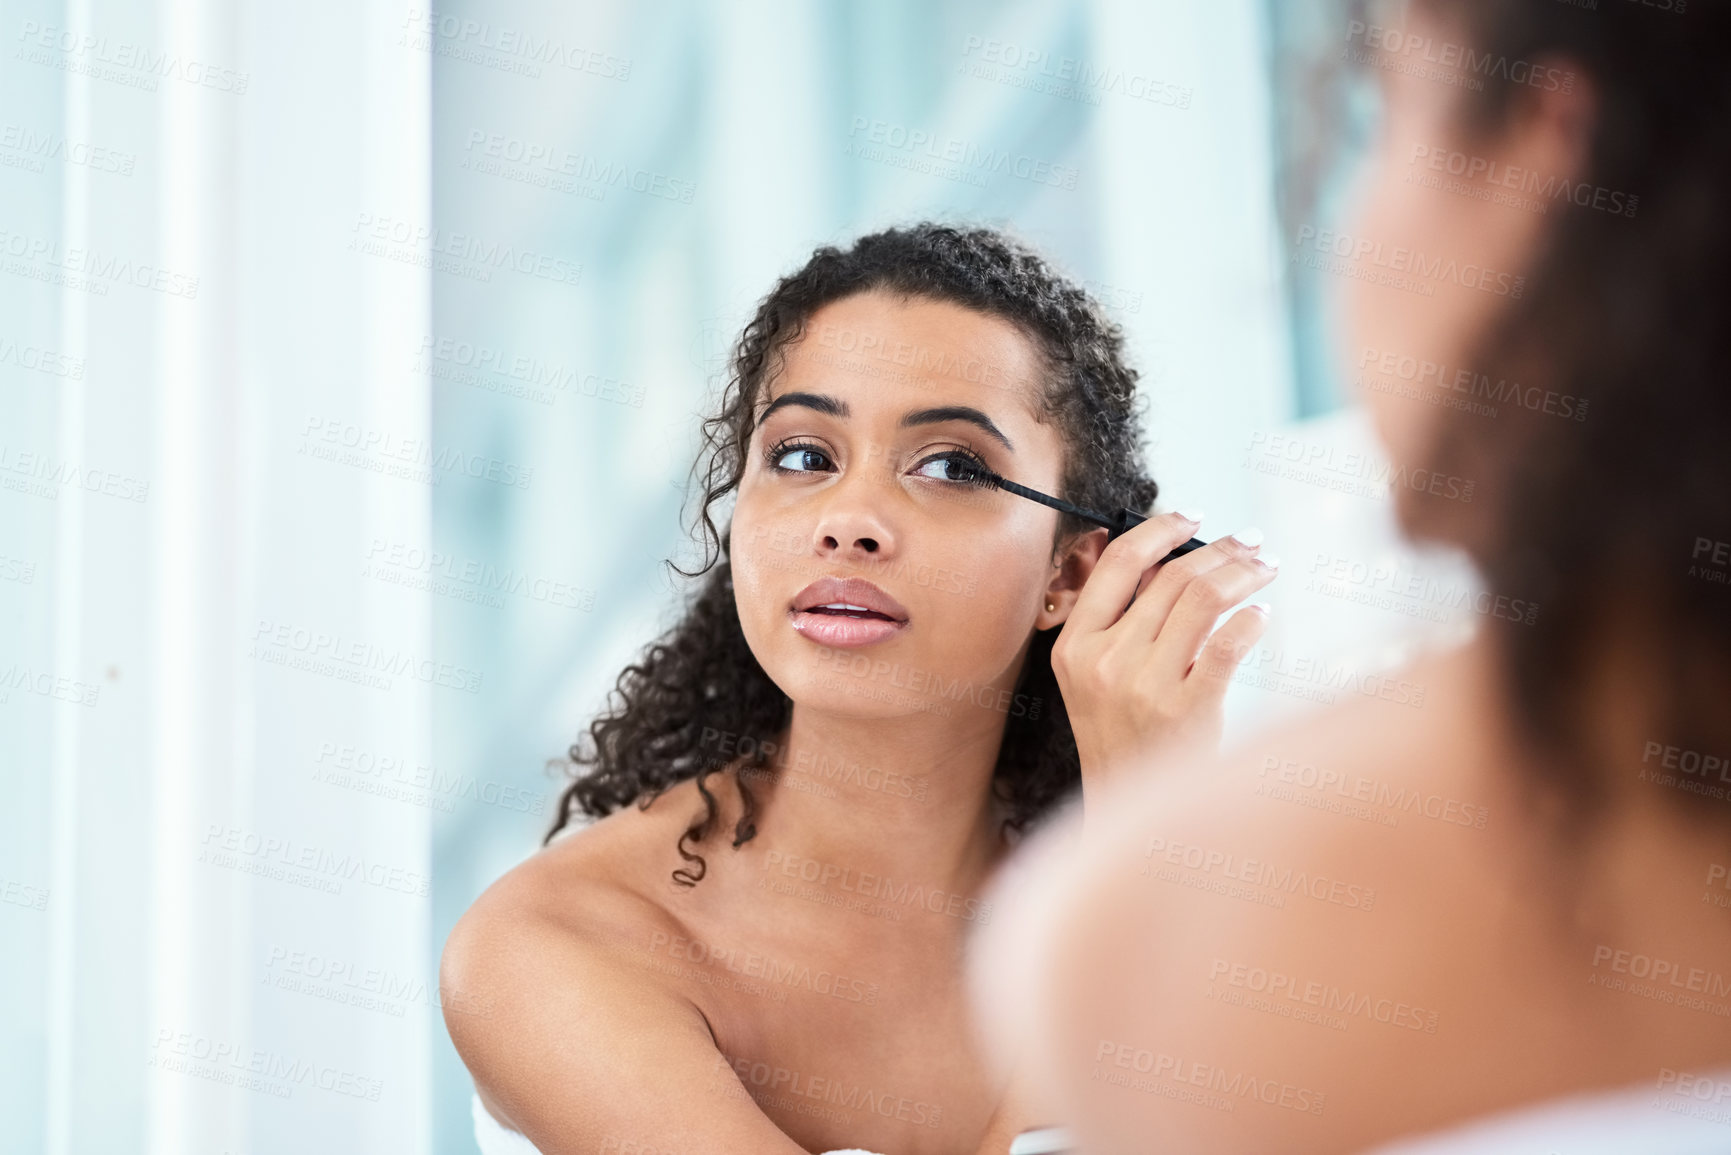 Buy stock photo Shot of a beautiful young woman applying mascara in her bathroom mirror